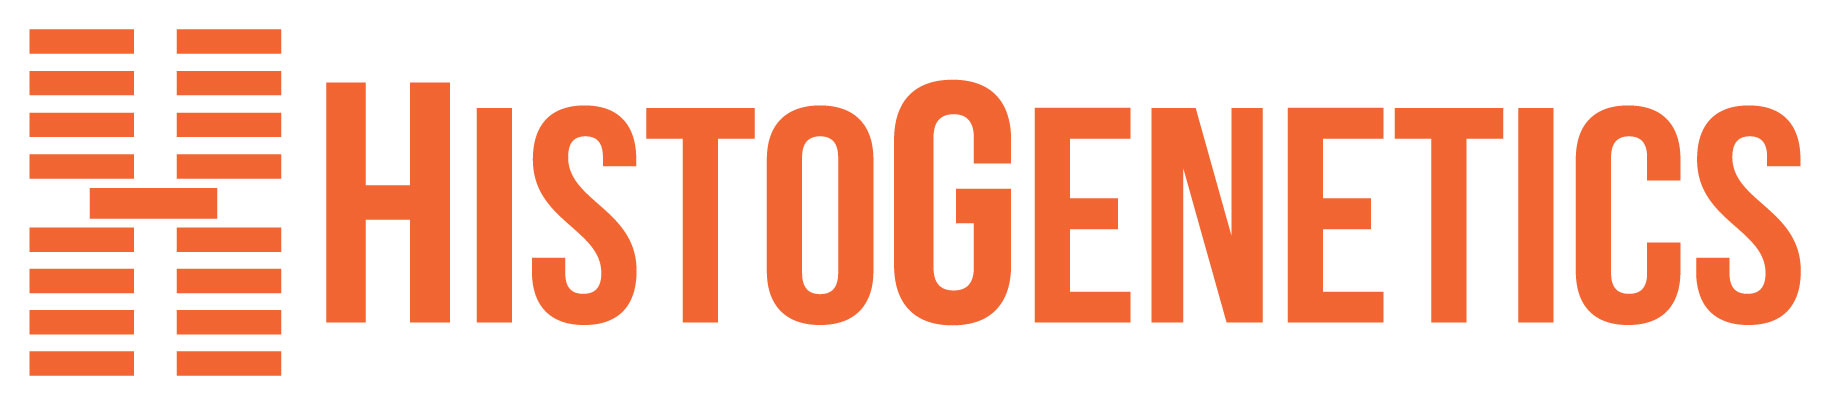 Histogenetics logo